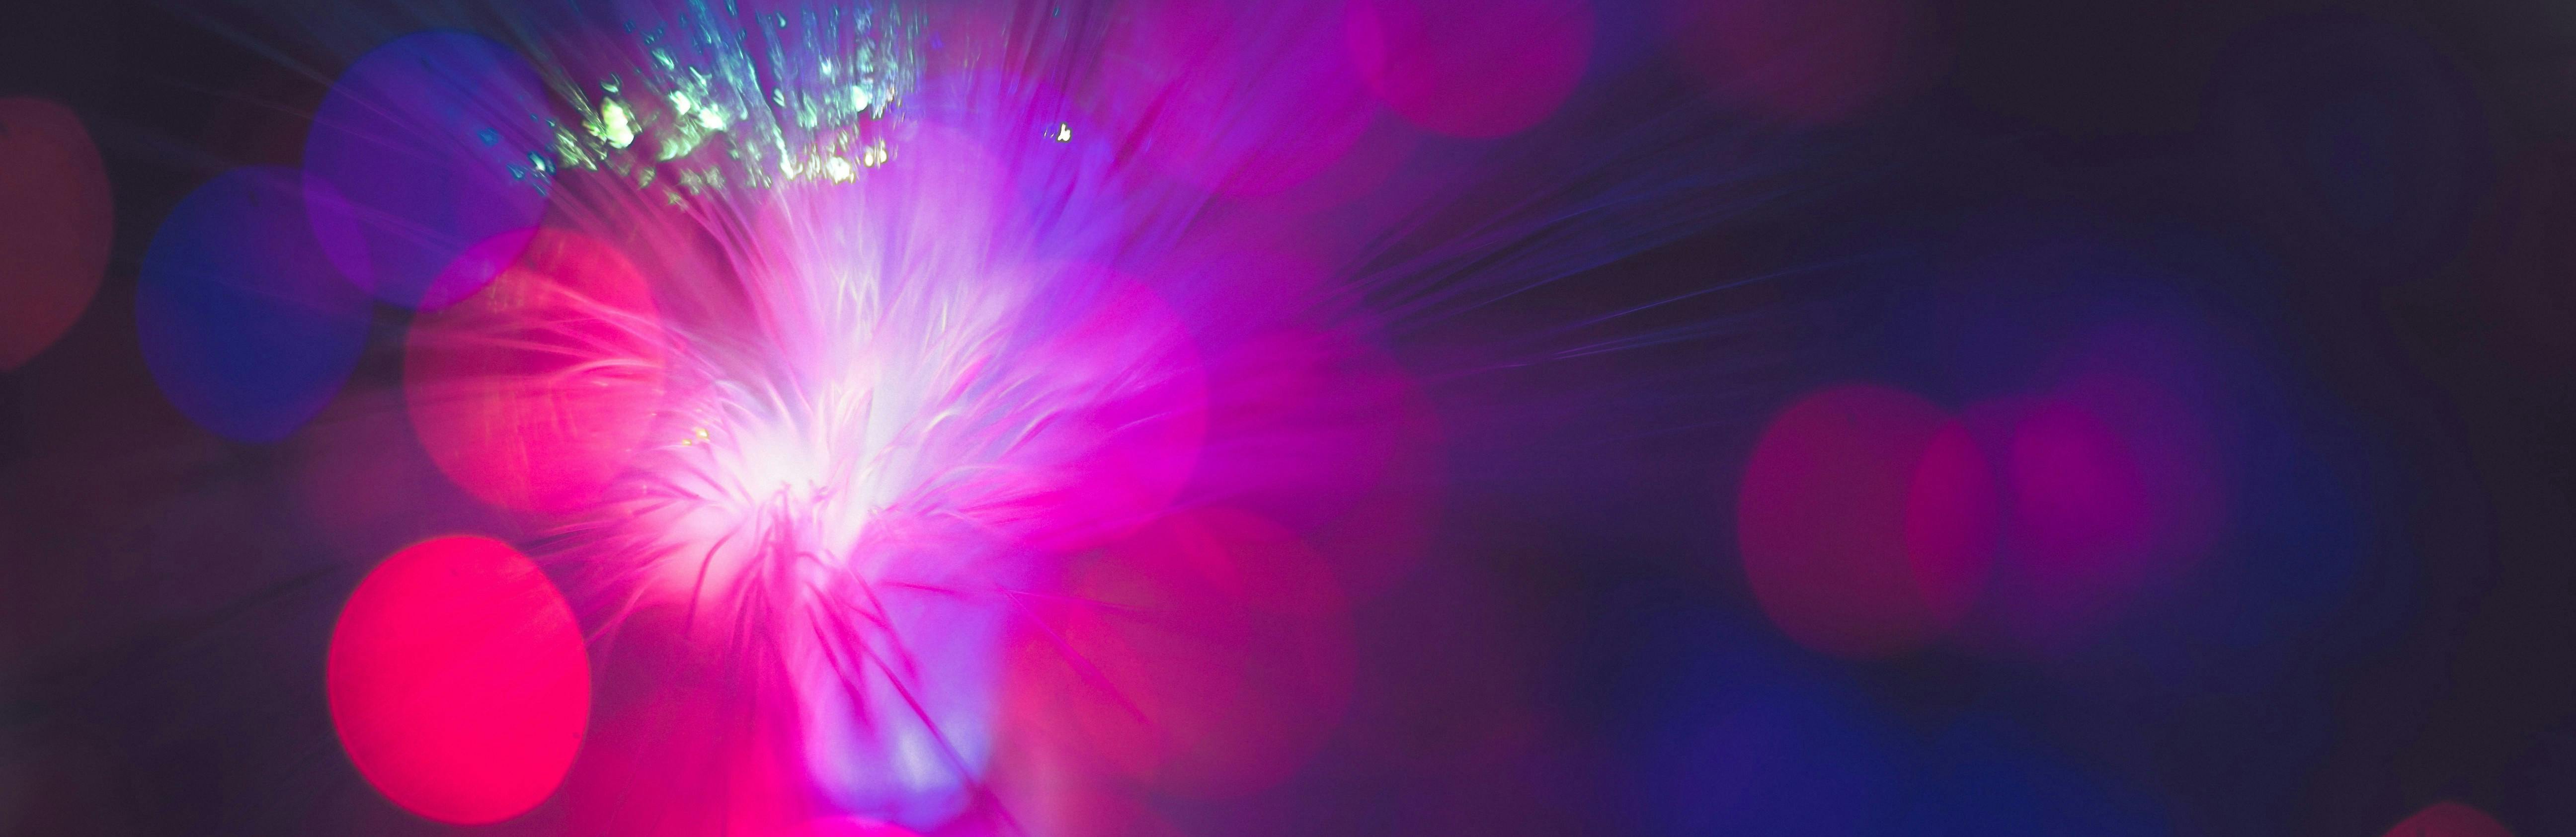 a lit up fiber-optic flower that looks a fair bit like fireworks